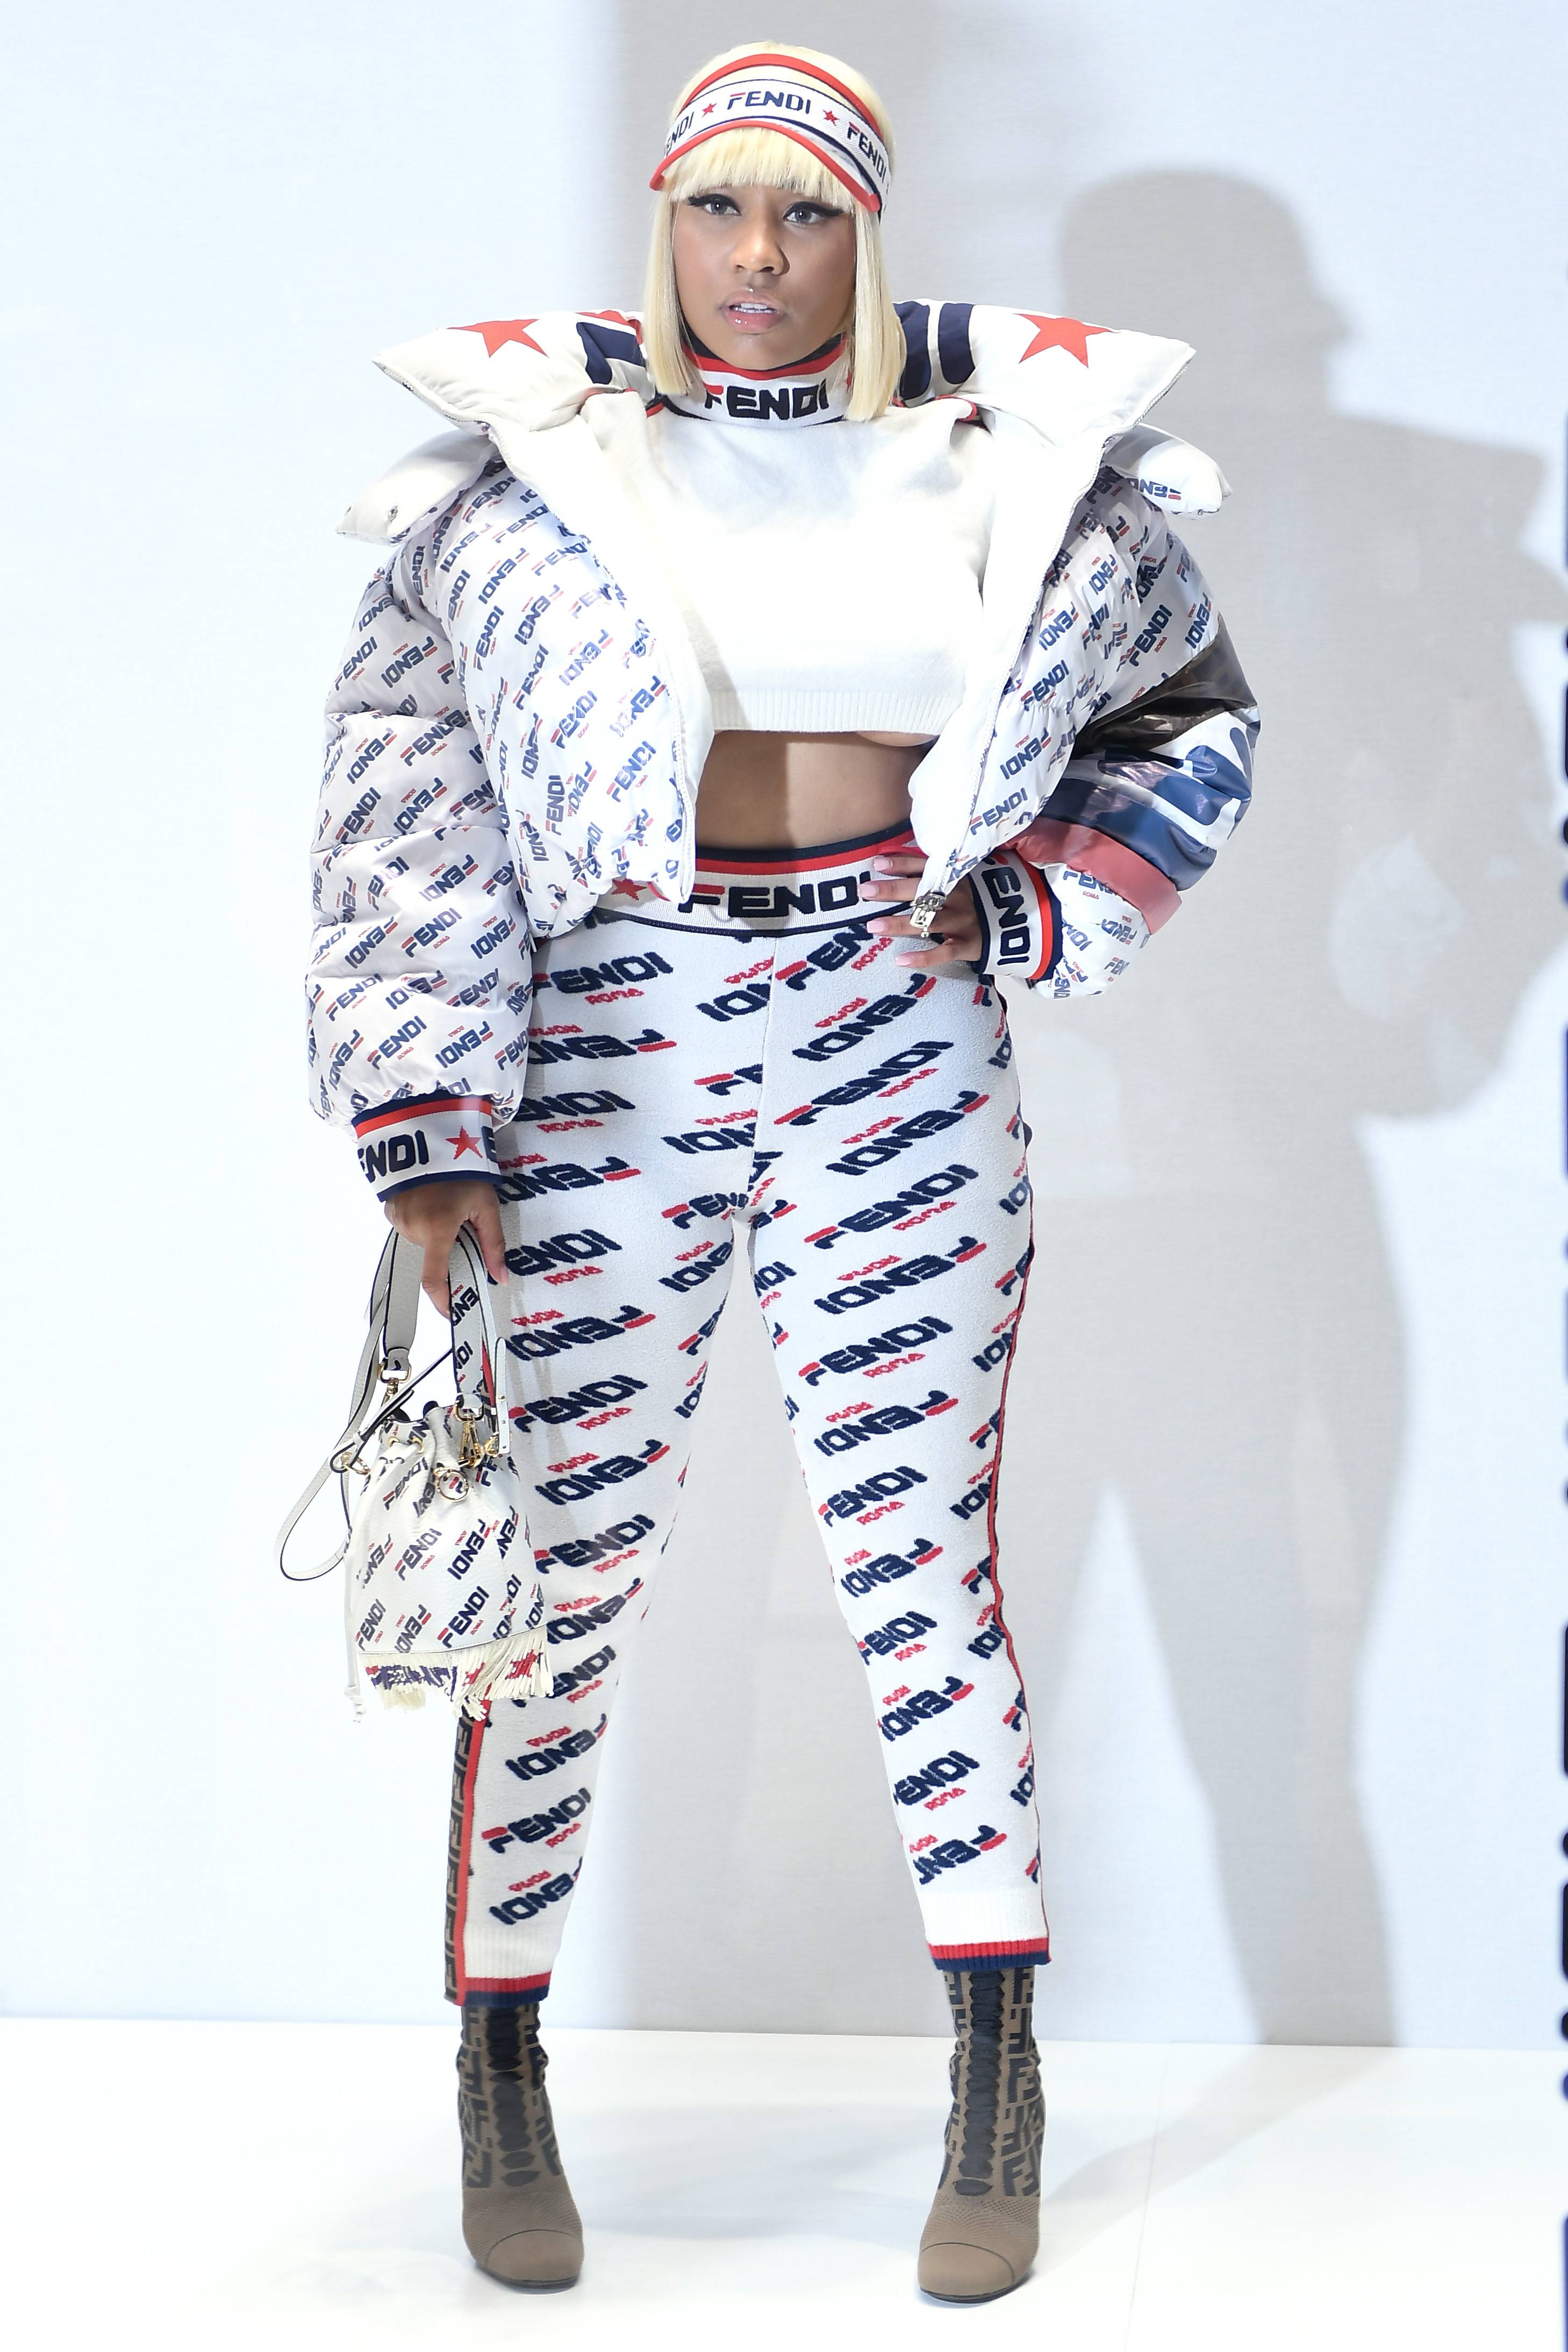 Fendi For Everybawwwwdy: Nicki Minaj Says Her Collection Is Made To Show  Skin! - Bossip